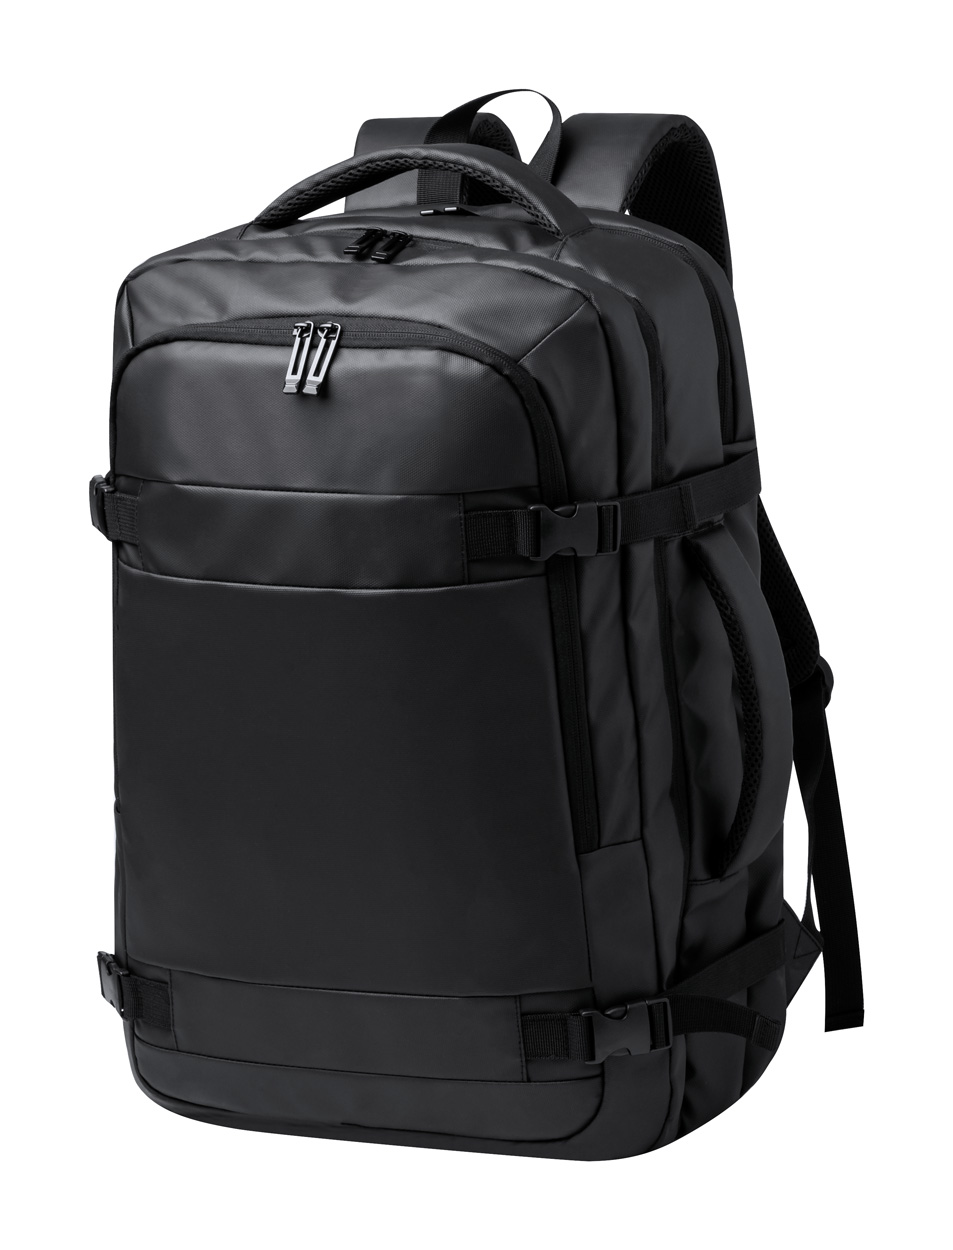 Tan backpack - black